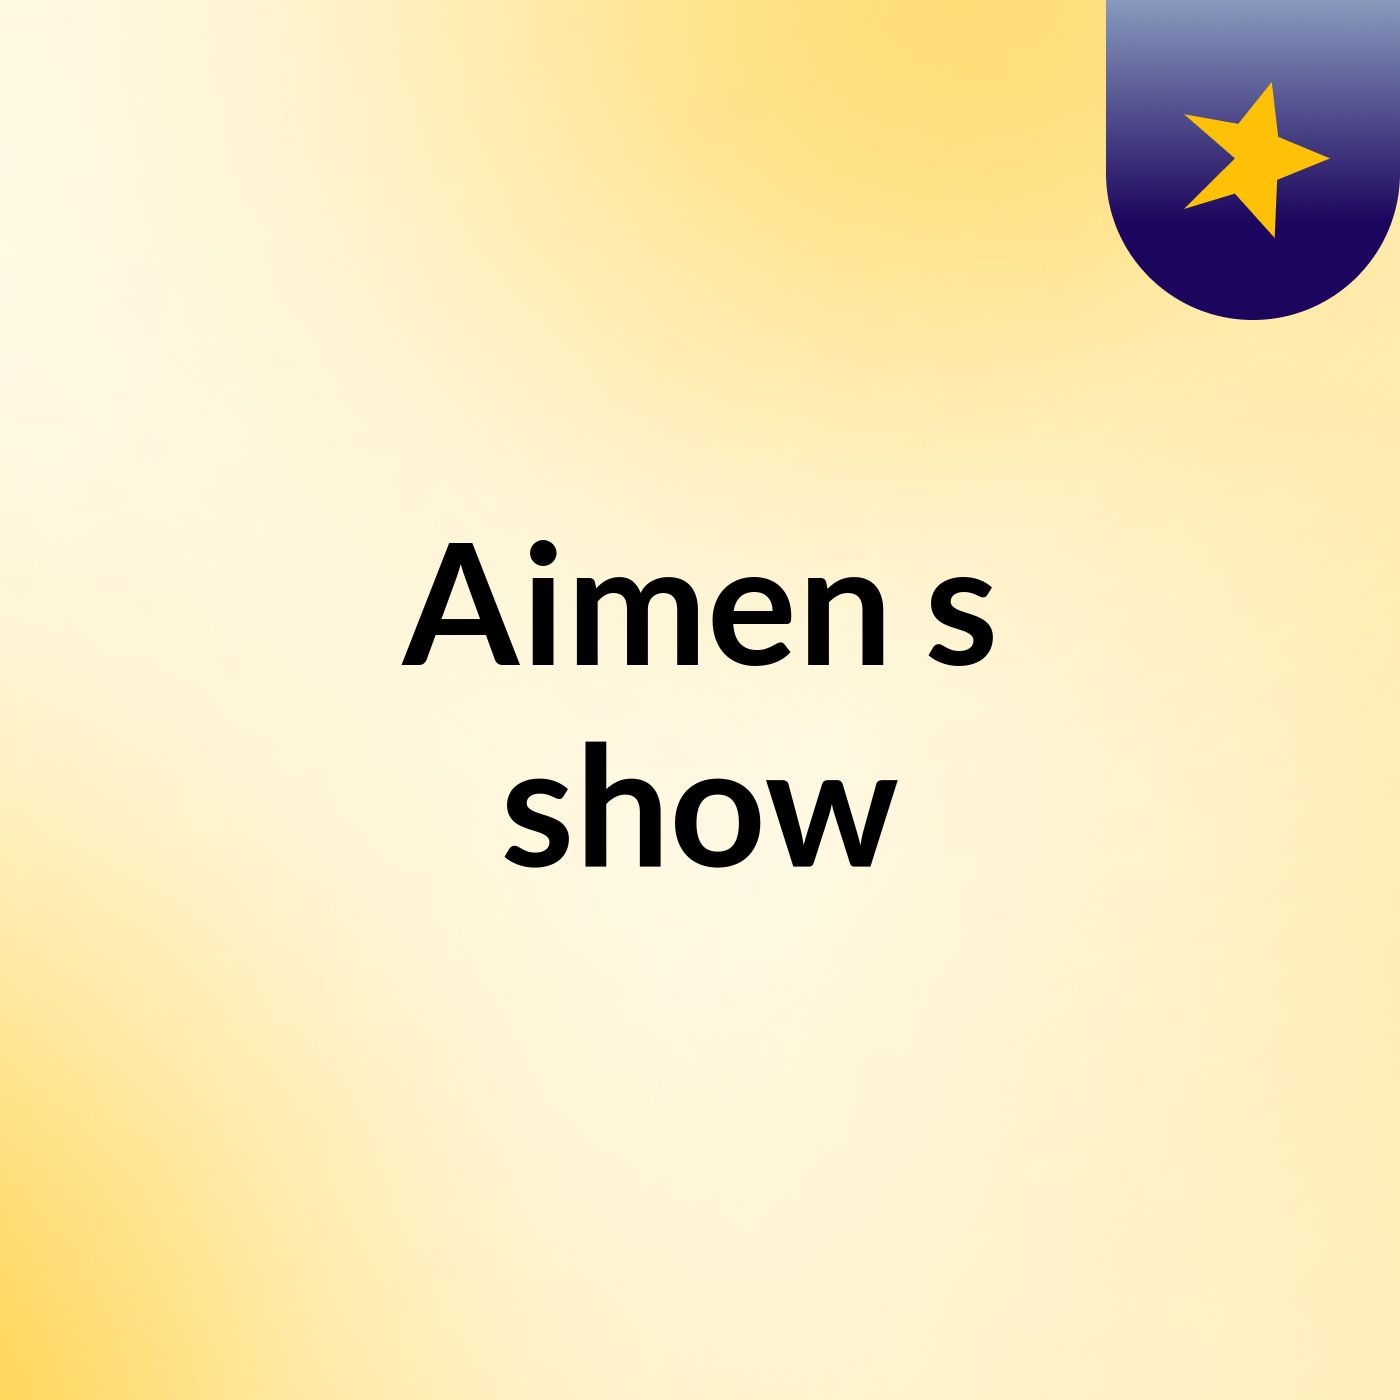 Aimen's show